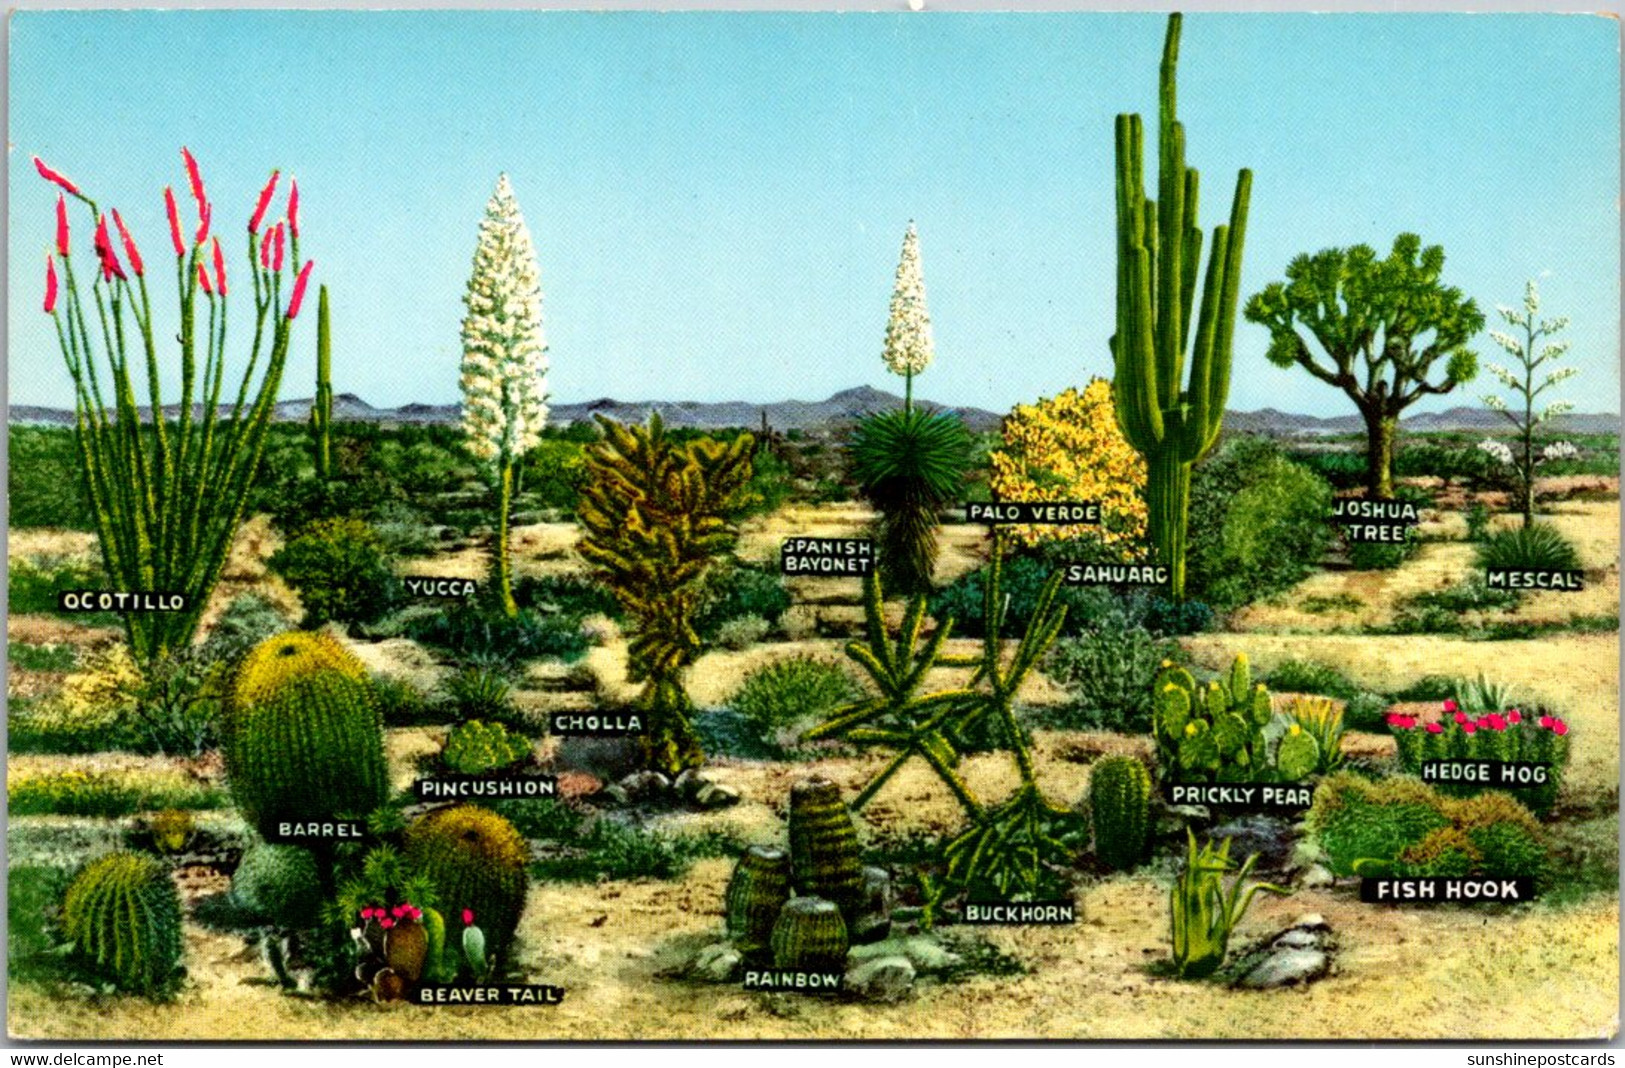 Cactus A Few Varieties Of Desert Vegetation - Cactus